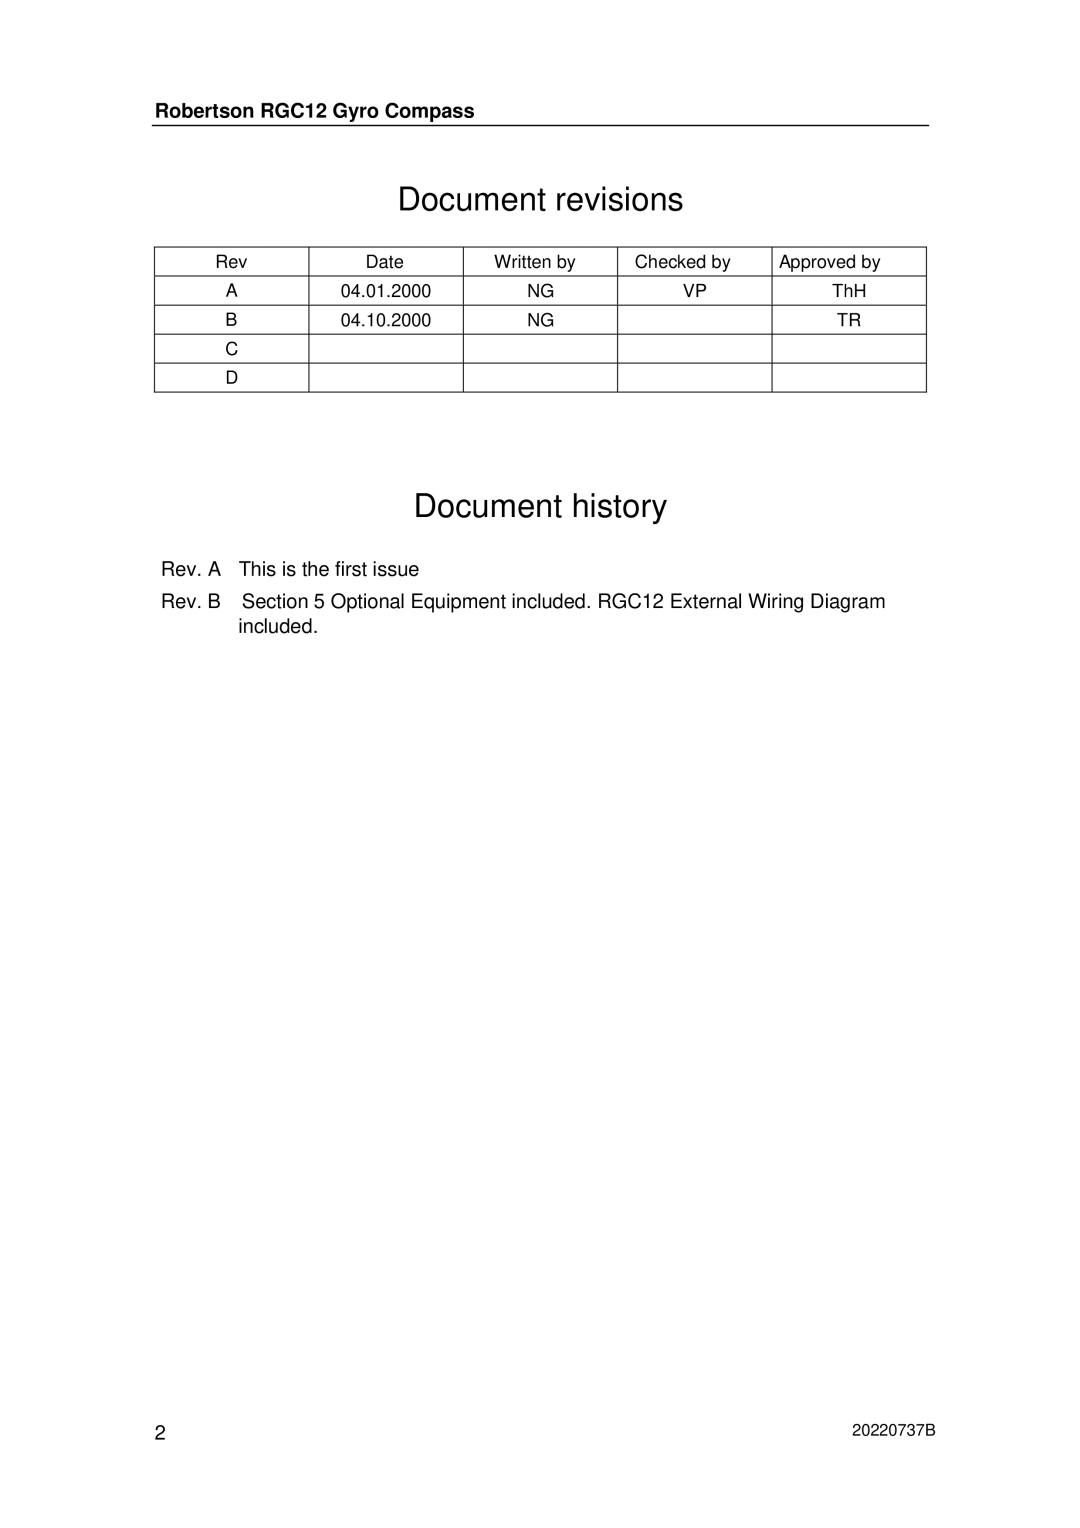 Simrad RGC12 manual Document revisions 